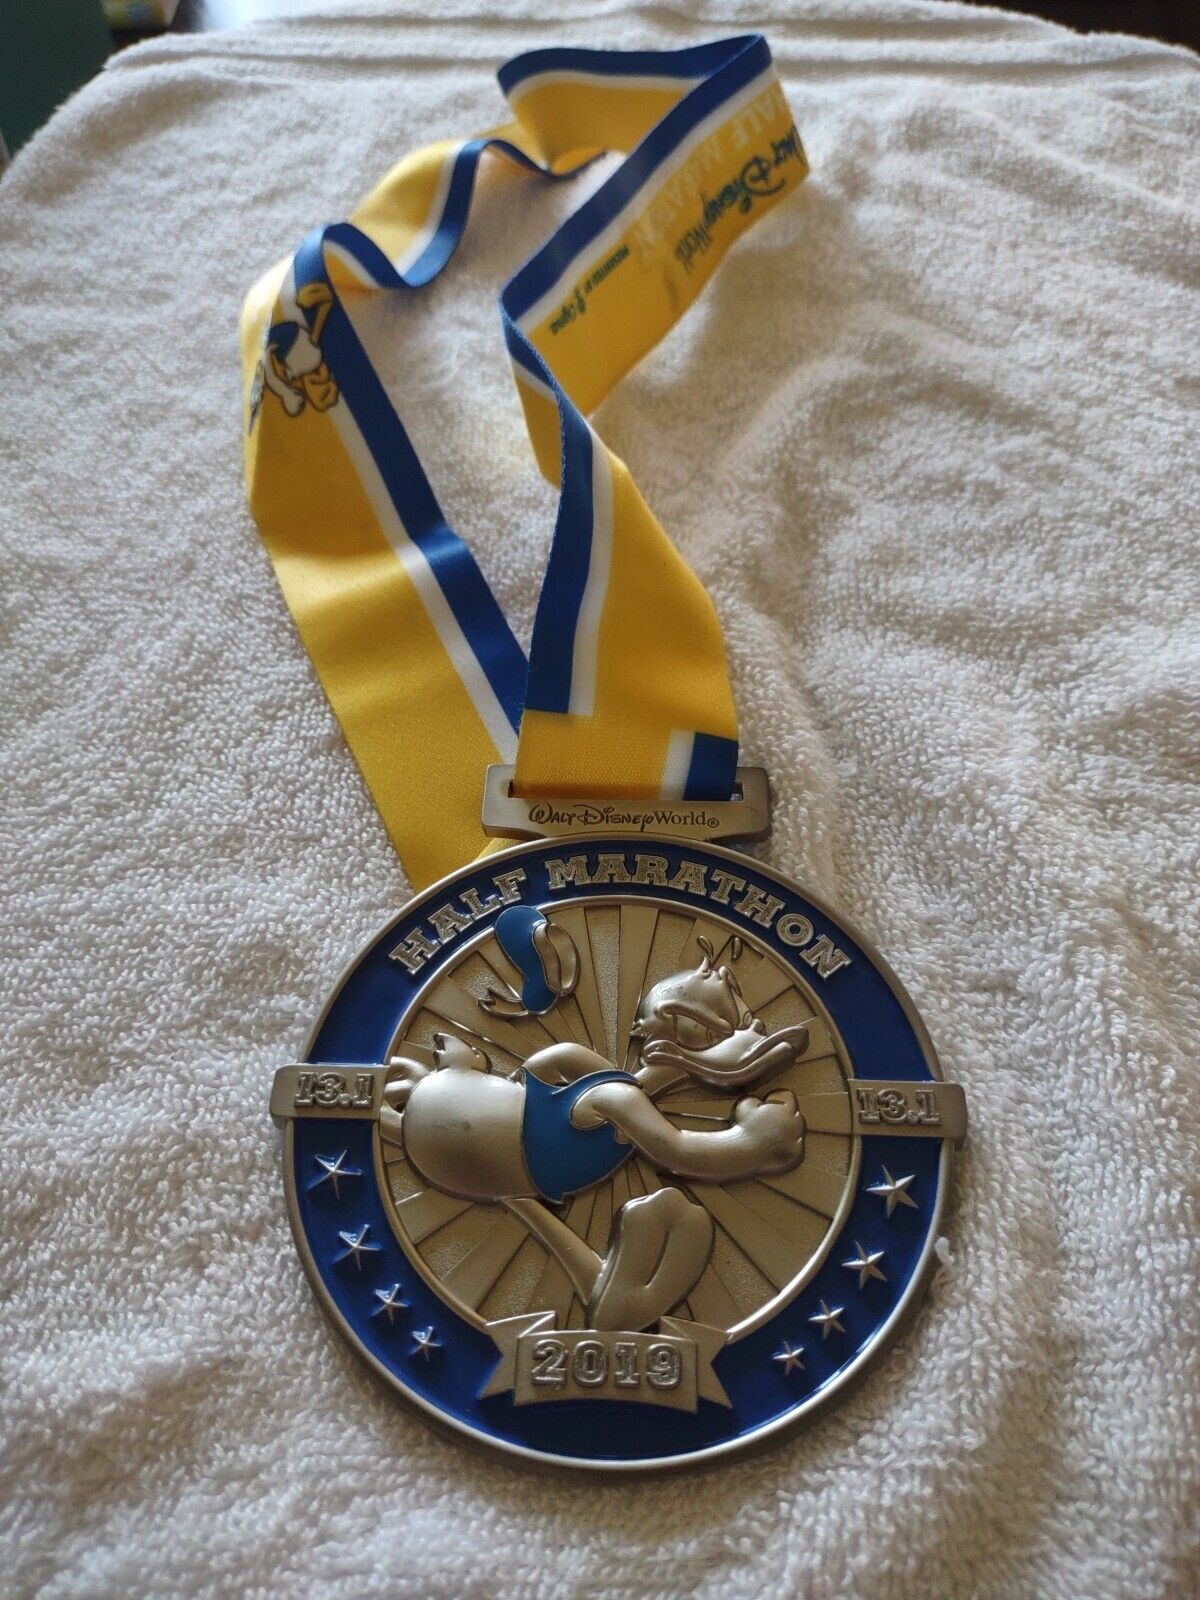 2019 Walt Disney World Donald 13.1 Half Marathon Medal